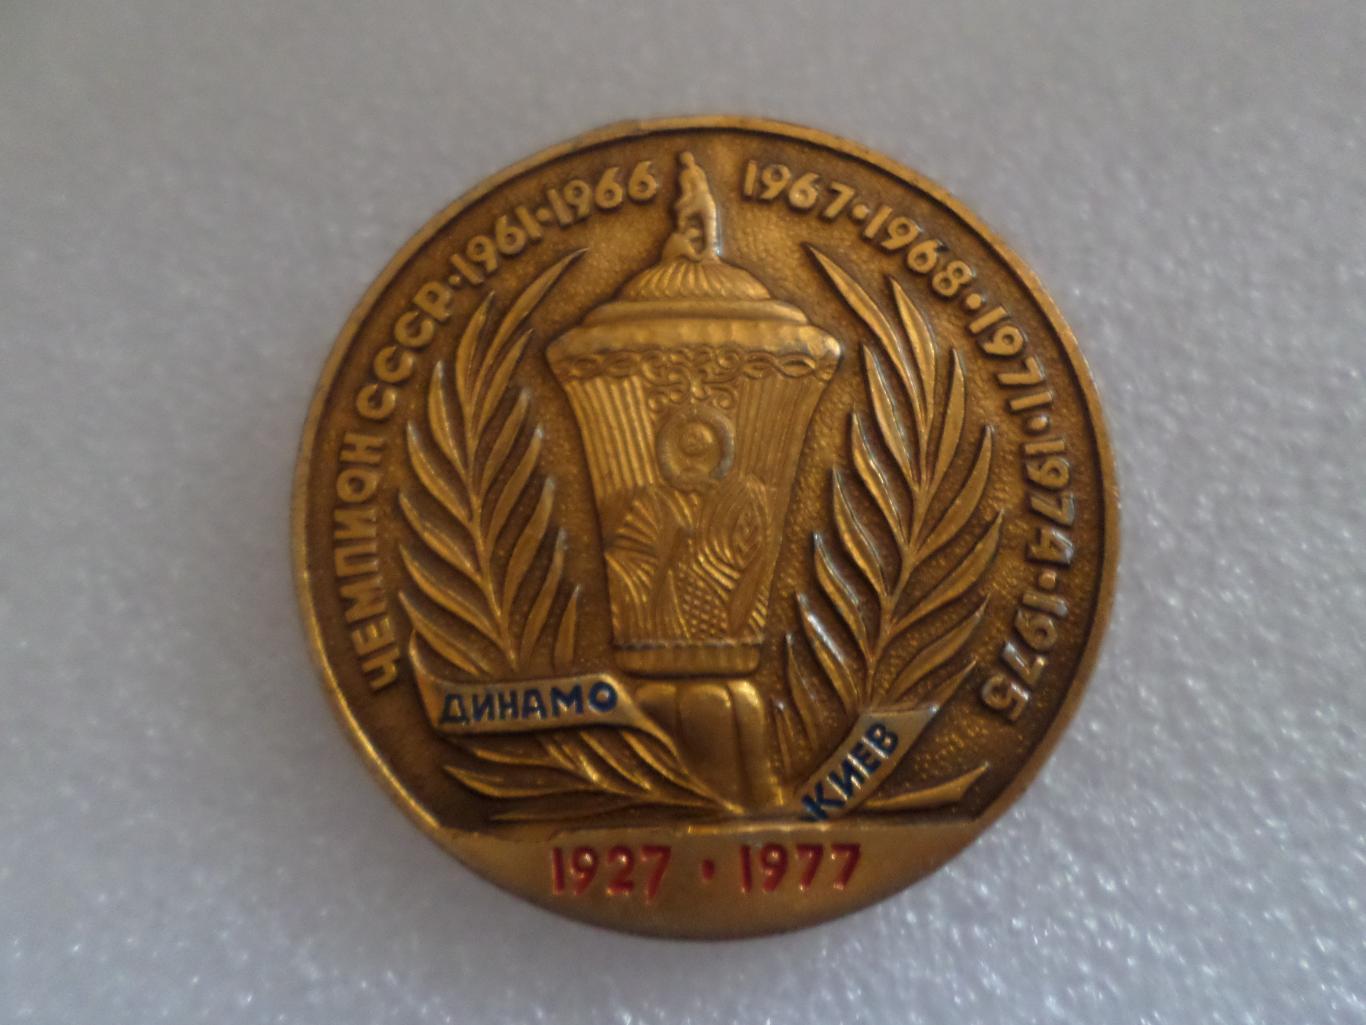 Значок Динамо Киев 1927-1977 чемпион СССР по футболу 1961-1975 гг